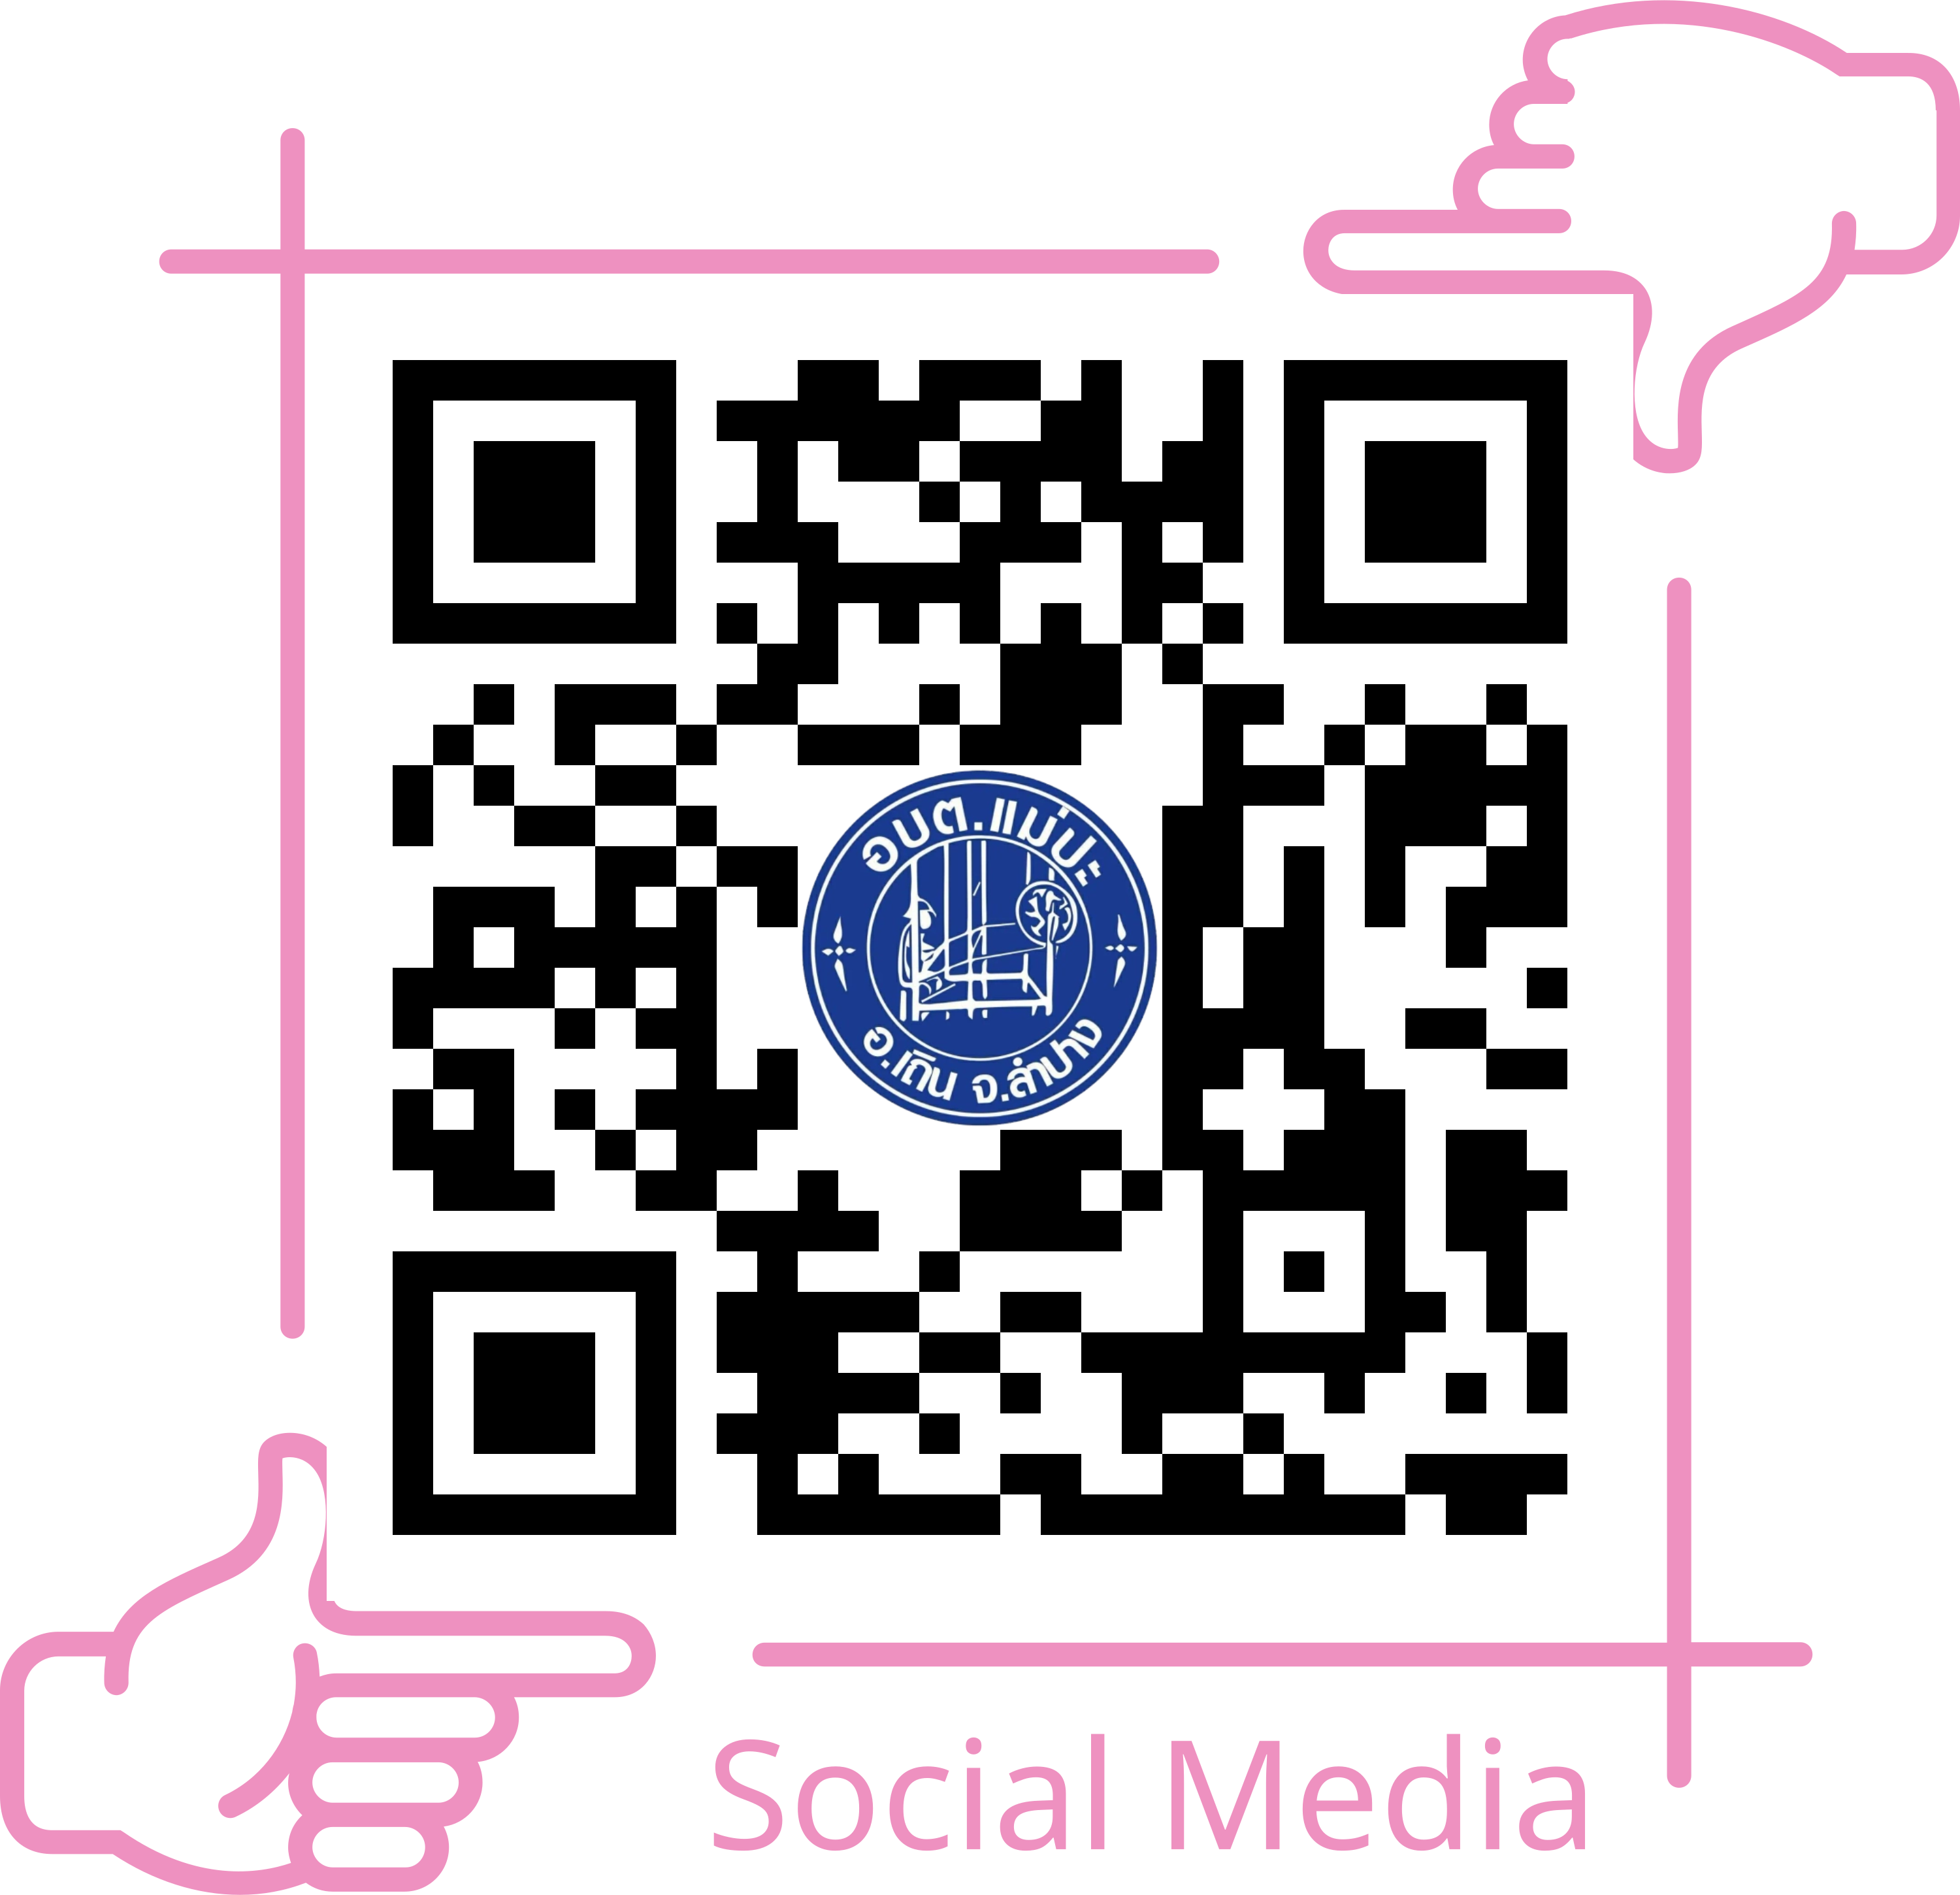 MPA-My_Social_Media_Page copy.png - 516.24 kB